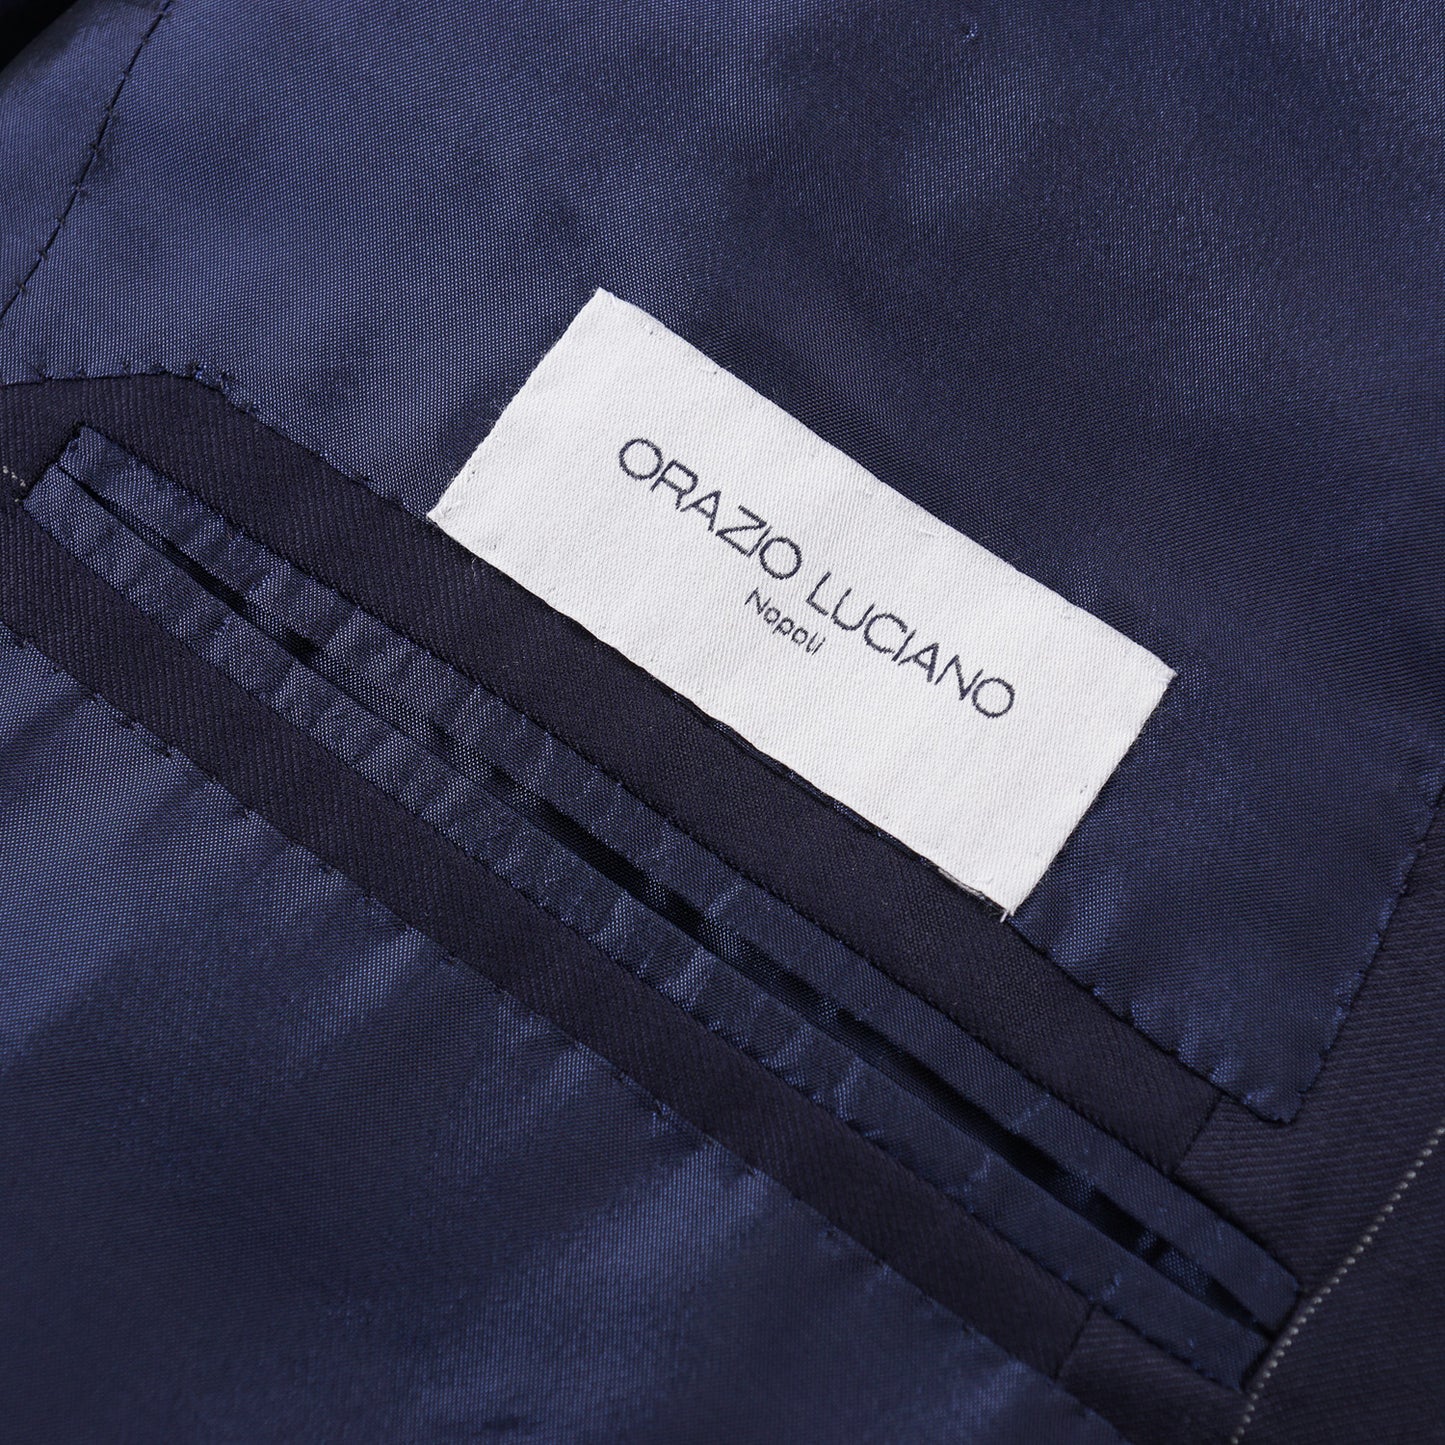 Orazio Luciano Navy Stripe Wool Suit - Top Shelf Apparel